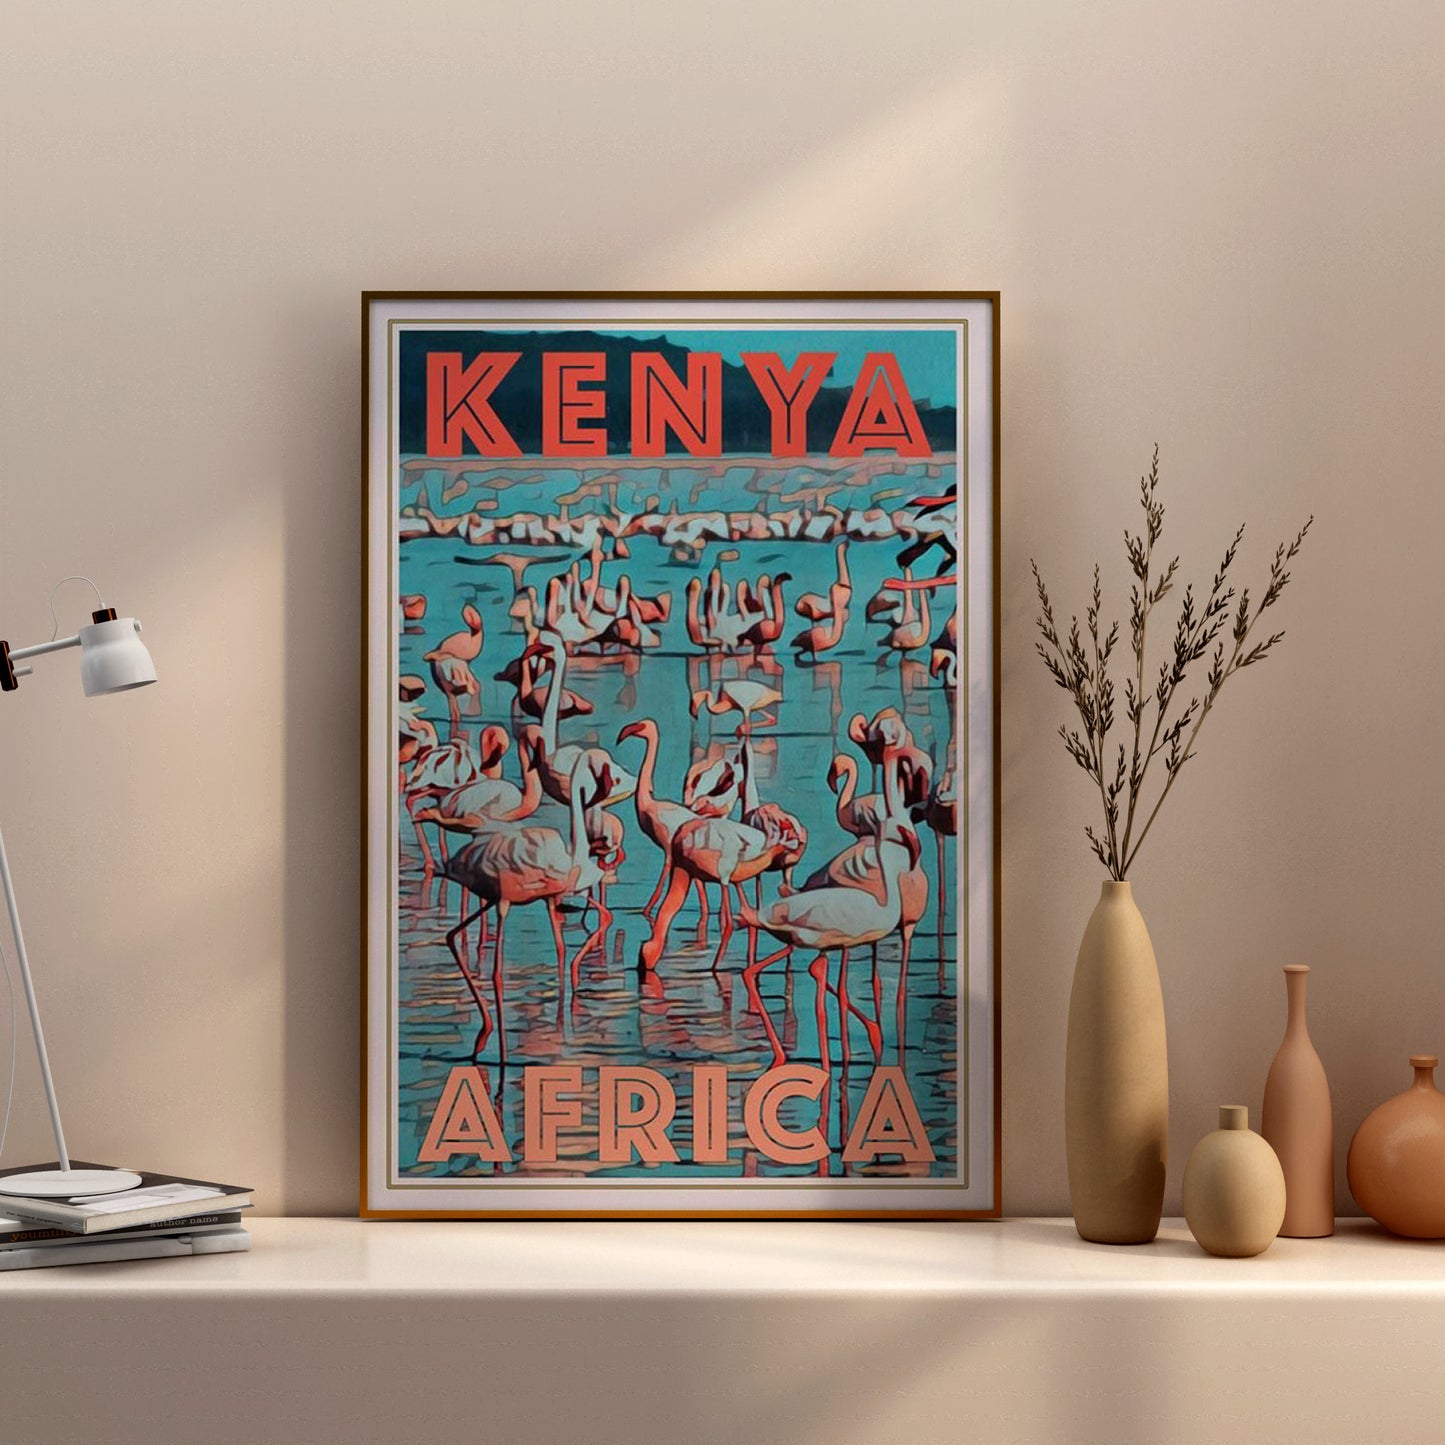 Kenya Africa---